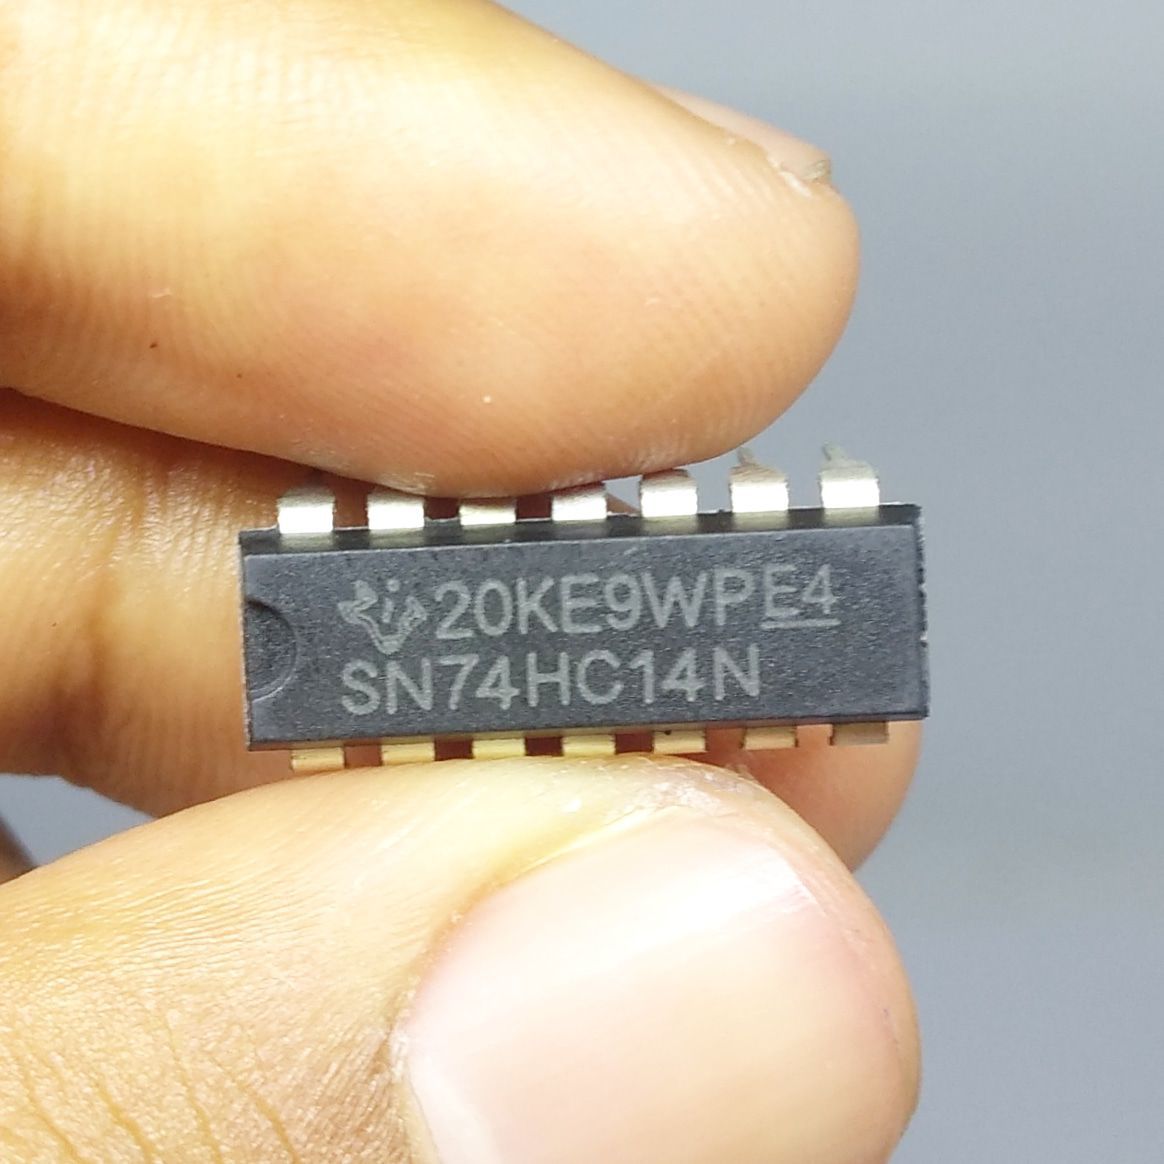 Kit 25 peças - Circuito Integrado SN74HC14N DIP14 - Texas Instruments